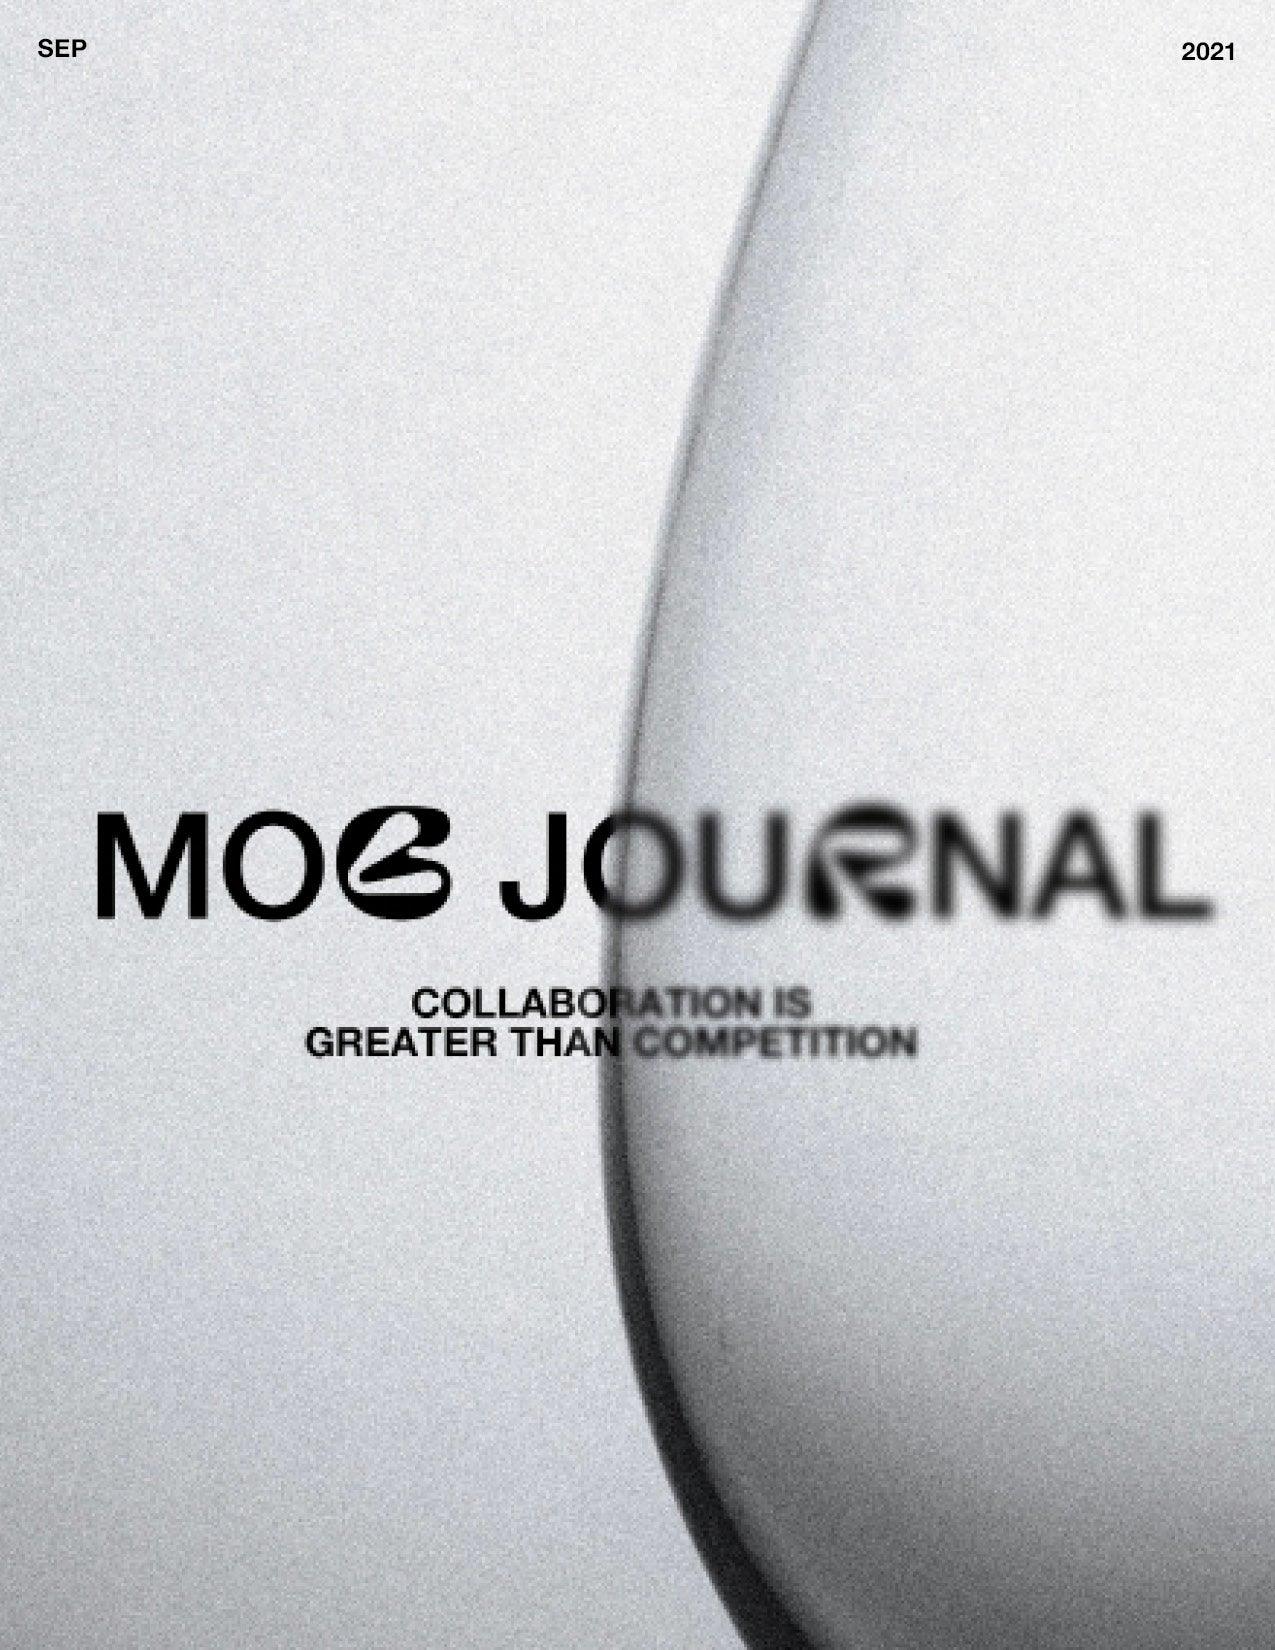 MOB JOURNAL | VOLUME SEVENTEEN | ISSUE #45 - Mob Journal